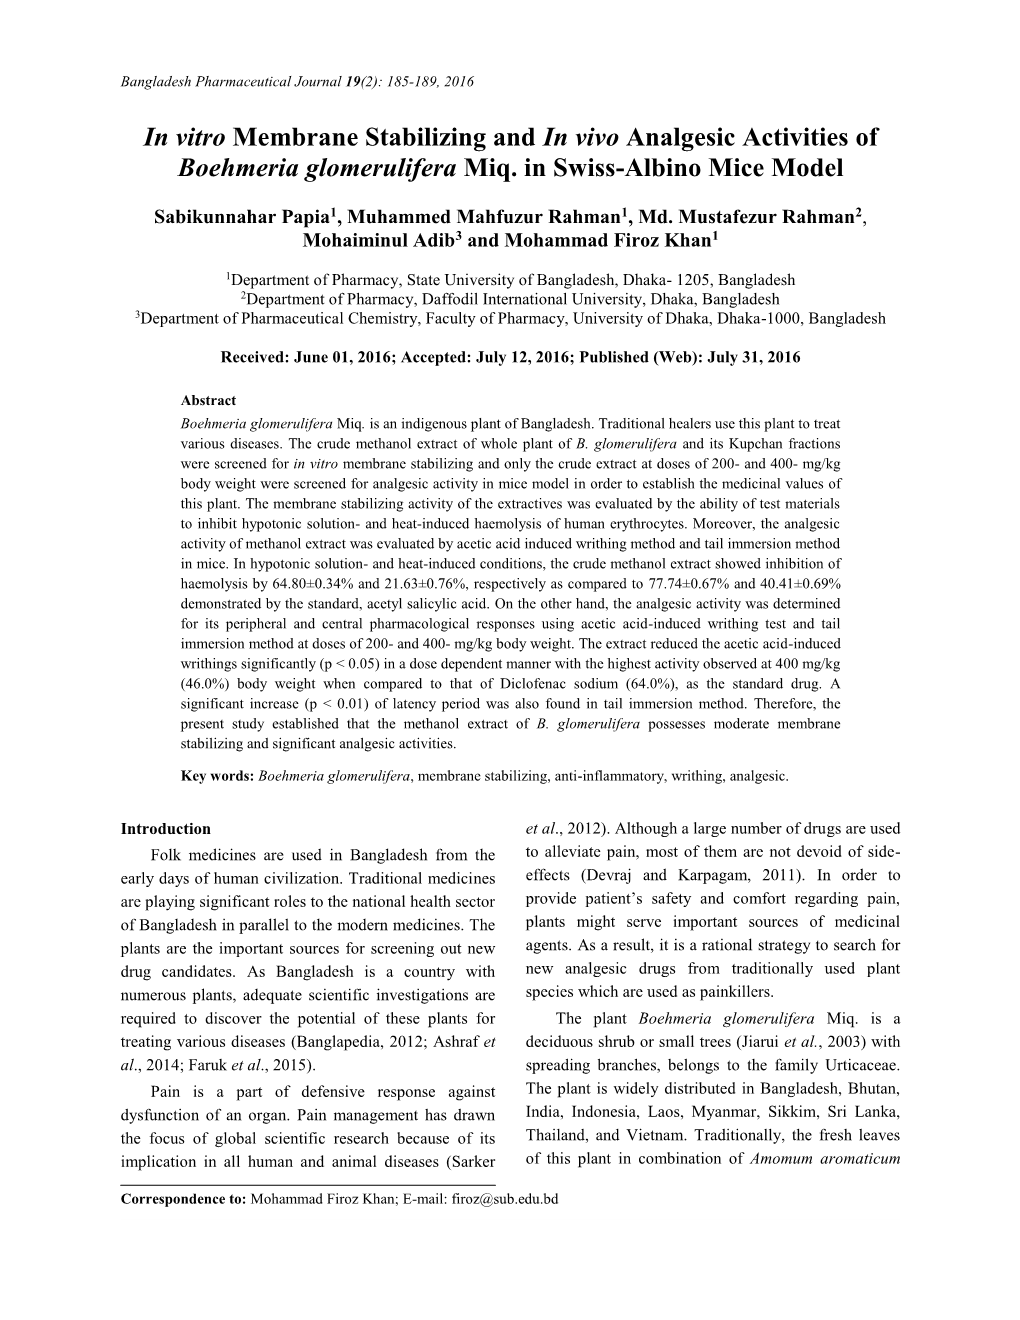 In Vitro Membrane Stabilizing and in Vivo Analgesic Activities of Boehmeria Glomerulifera Miq